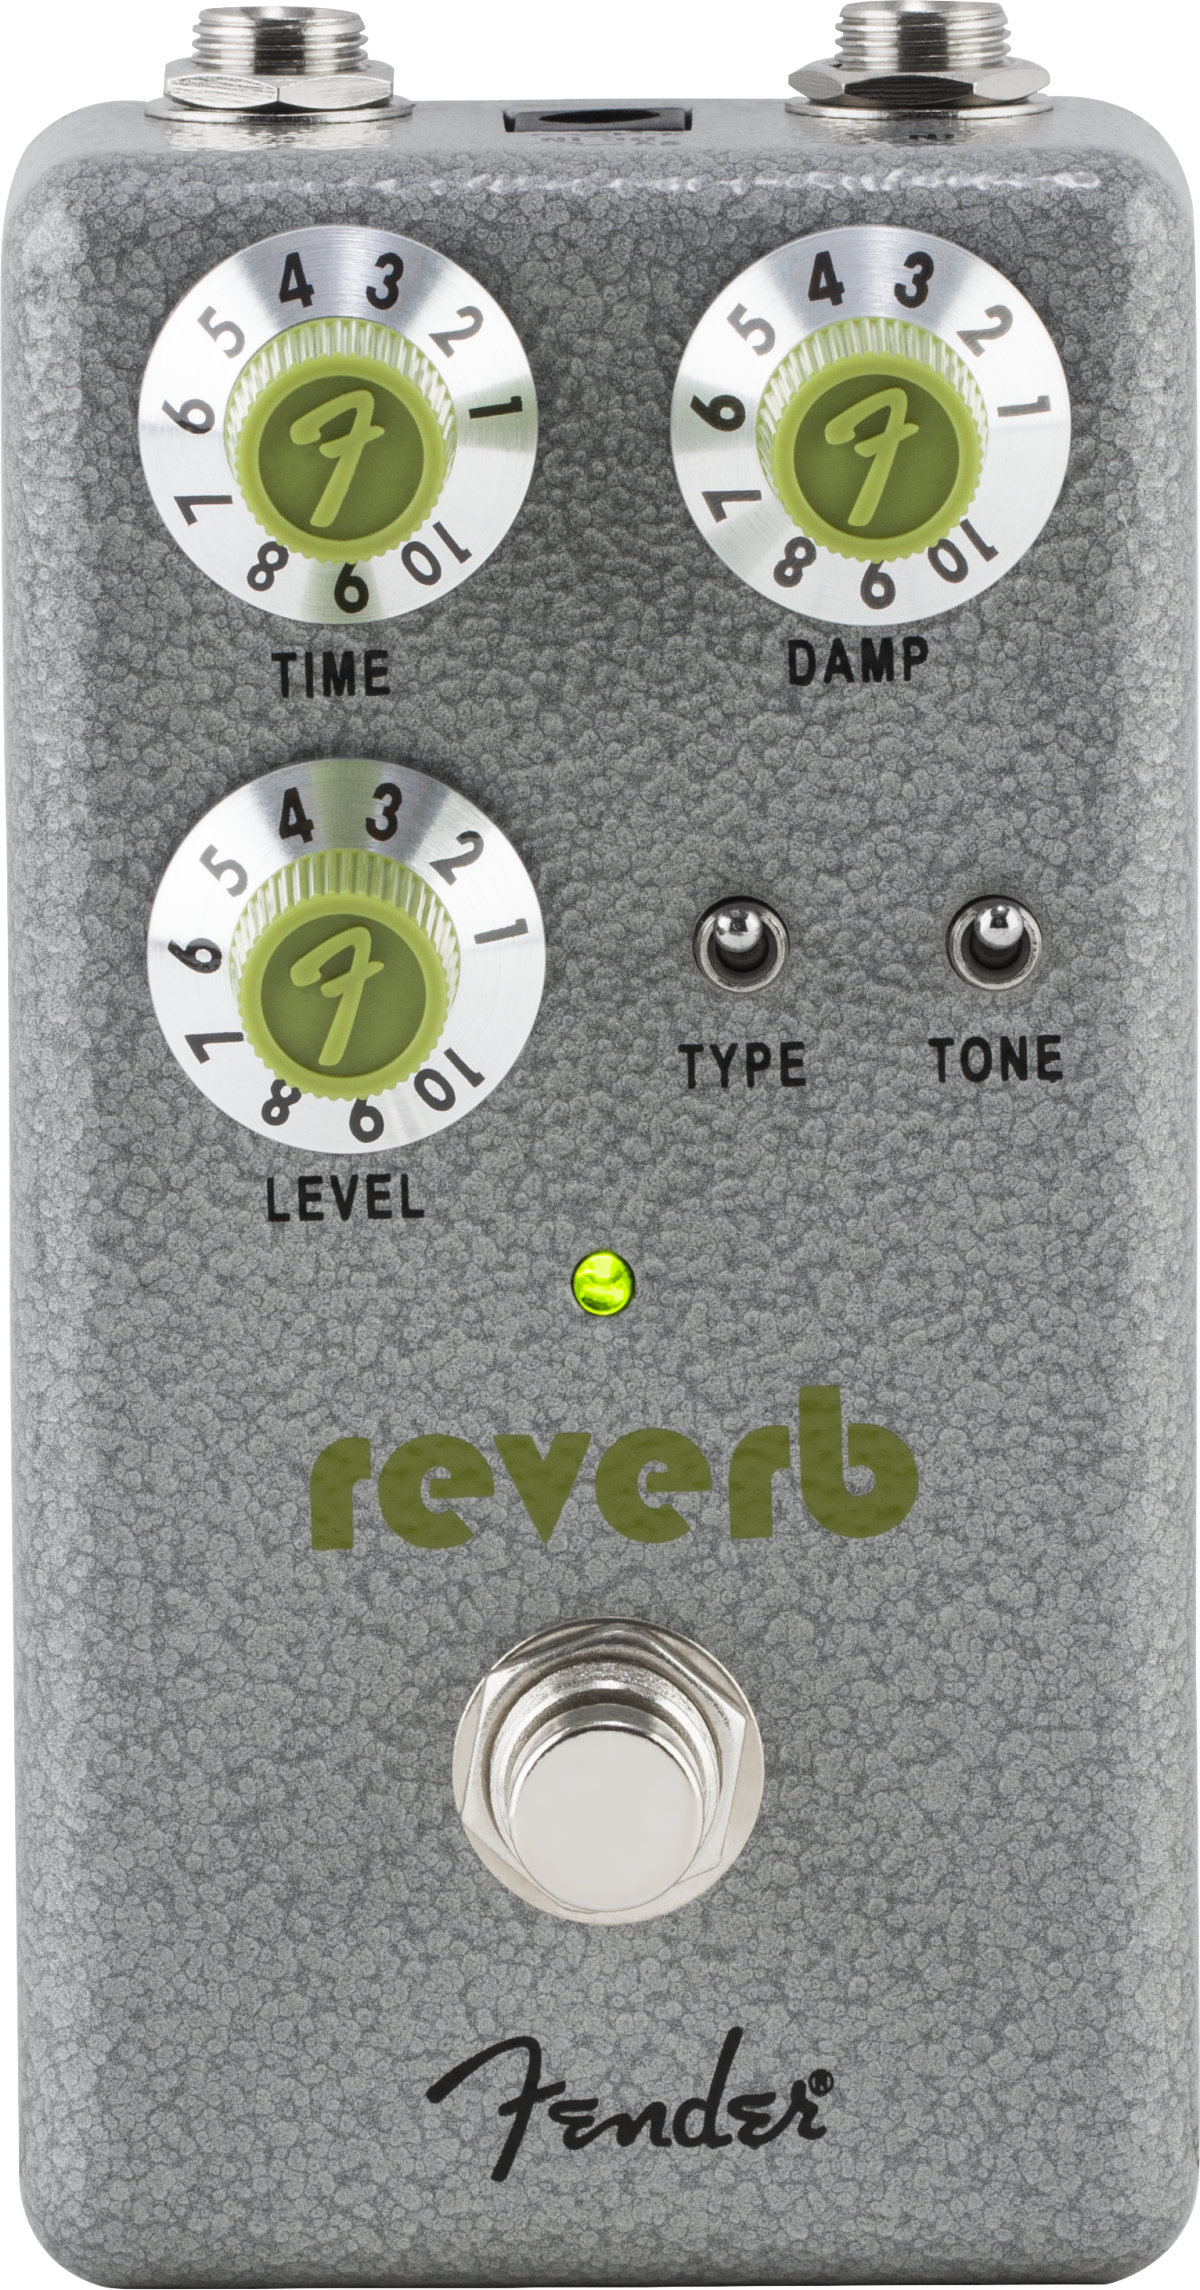 Fender Hammertone Reverb - Reverb/delay/echo effect pedaal - Variation 1